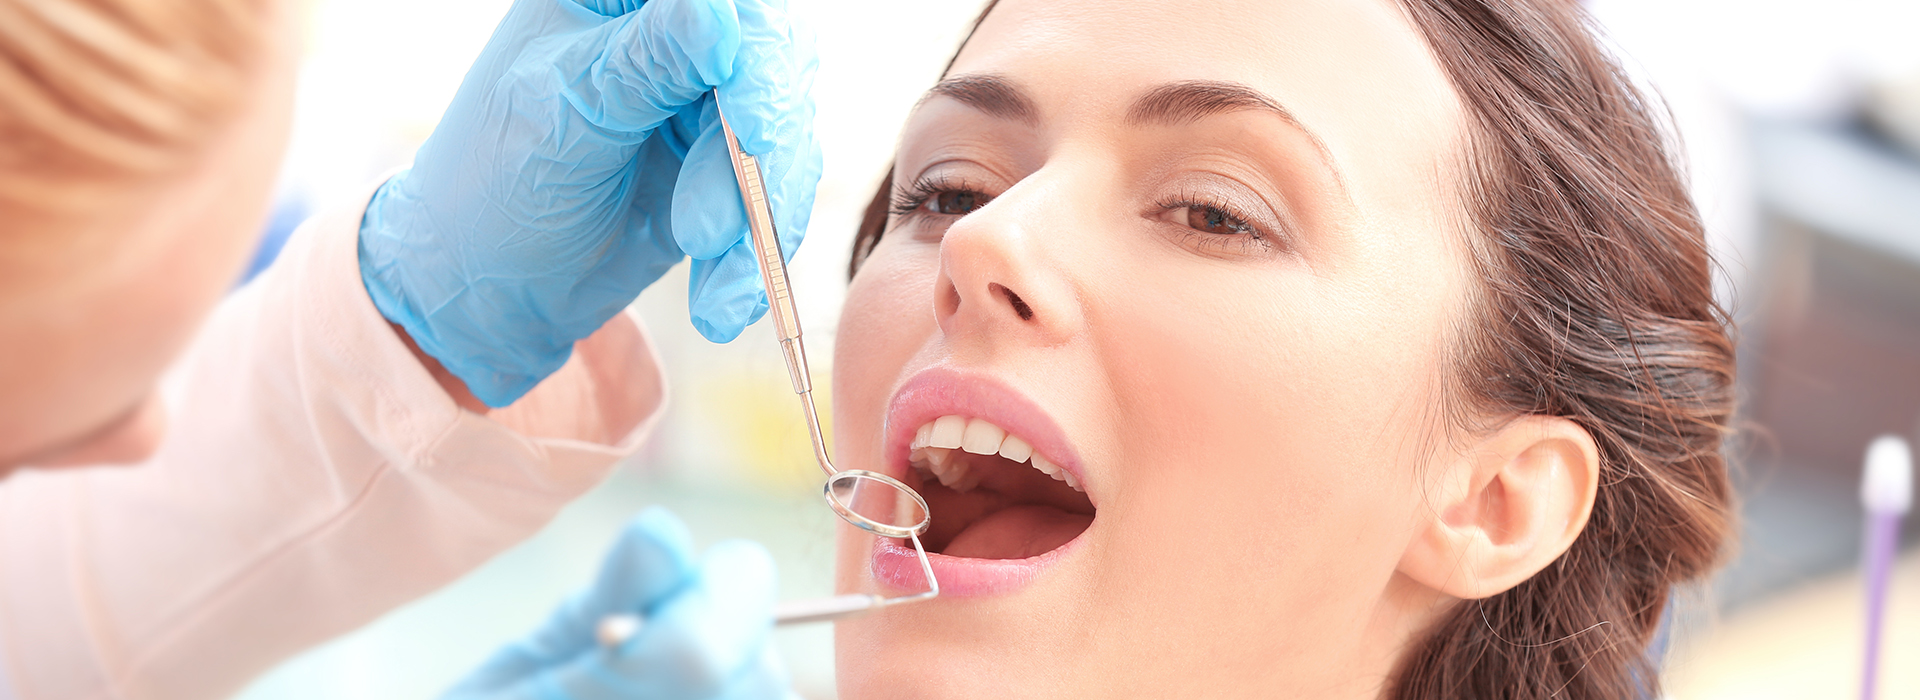 M. Derek Davis, DDS | Laser Dentistry, Cosmetic Dentistry and Dentures